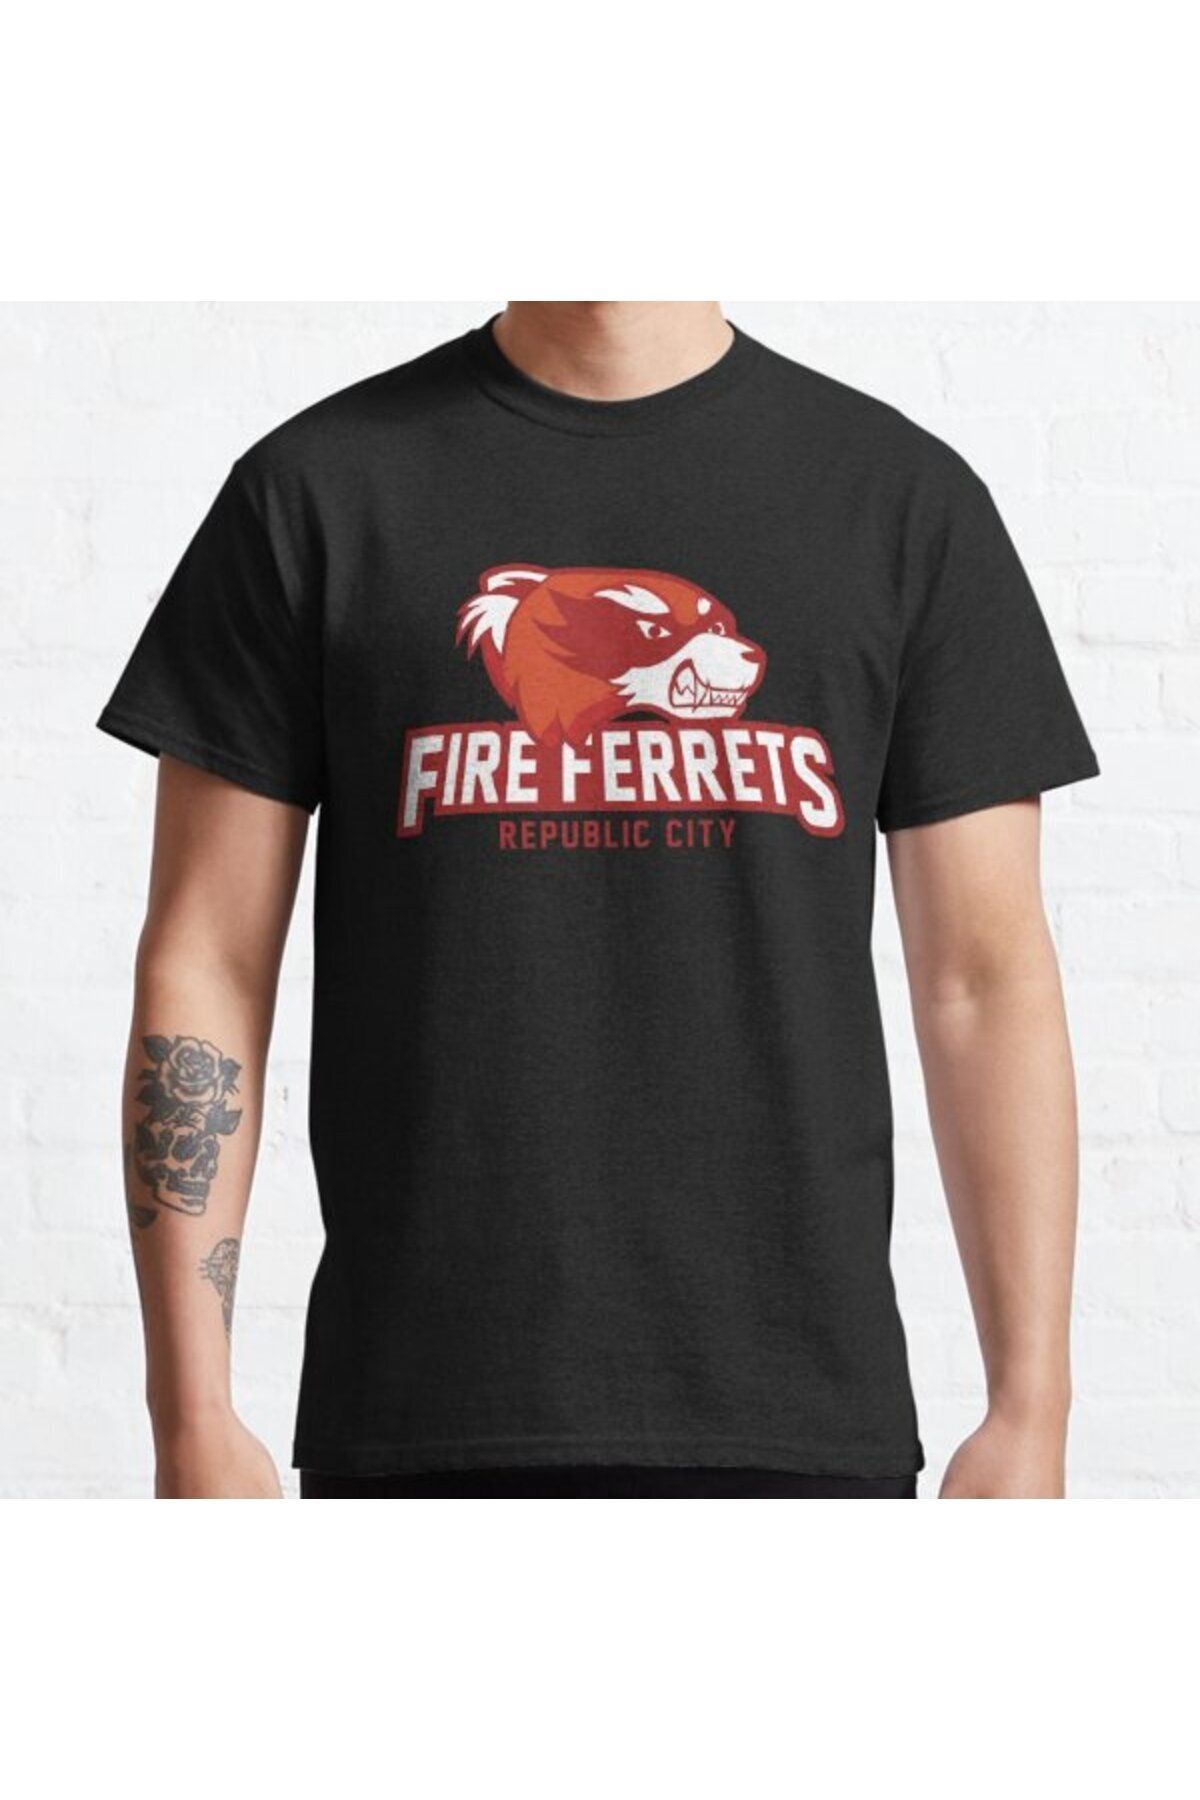 ZOKAWEAR Bol Kalıp Republic City Fire Ferrets Tasarım Baskılı T-shirt